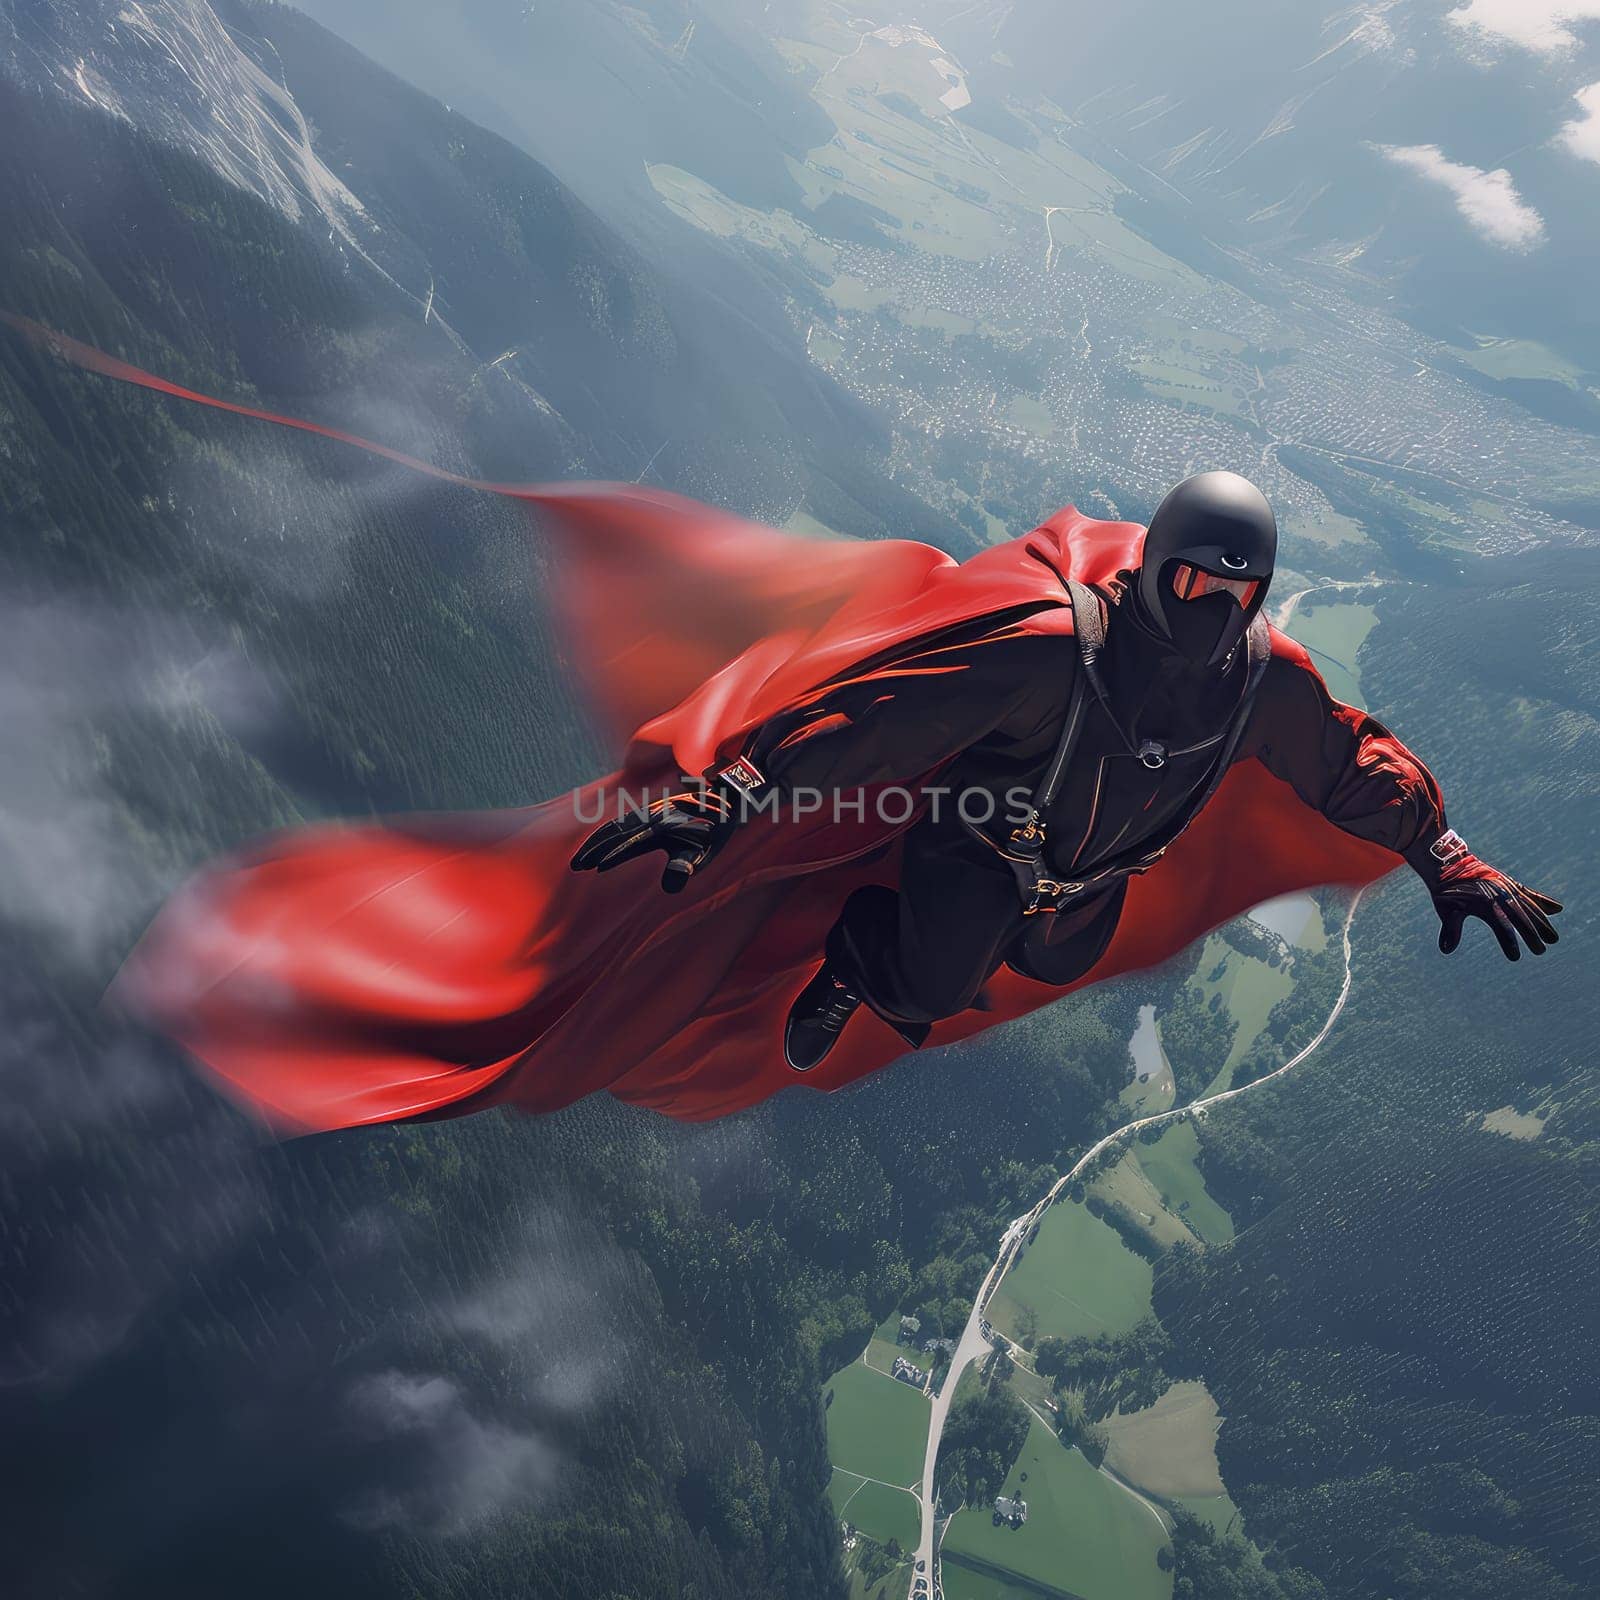 Wingsuit flyer photo realistic illustration - Generative AI. Man, wingsuit, mountain, sky.